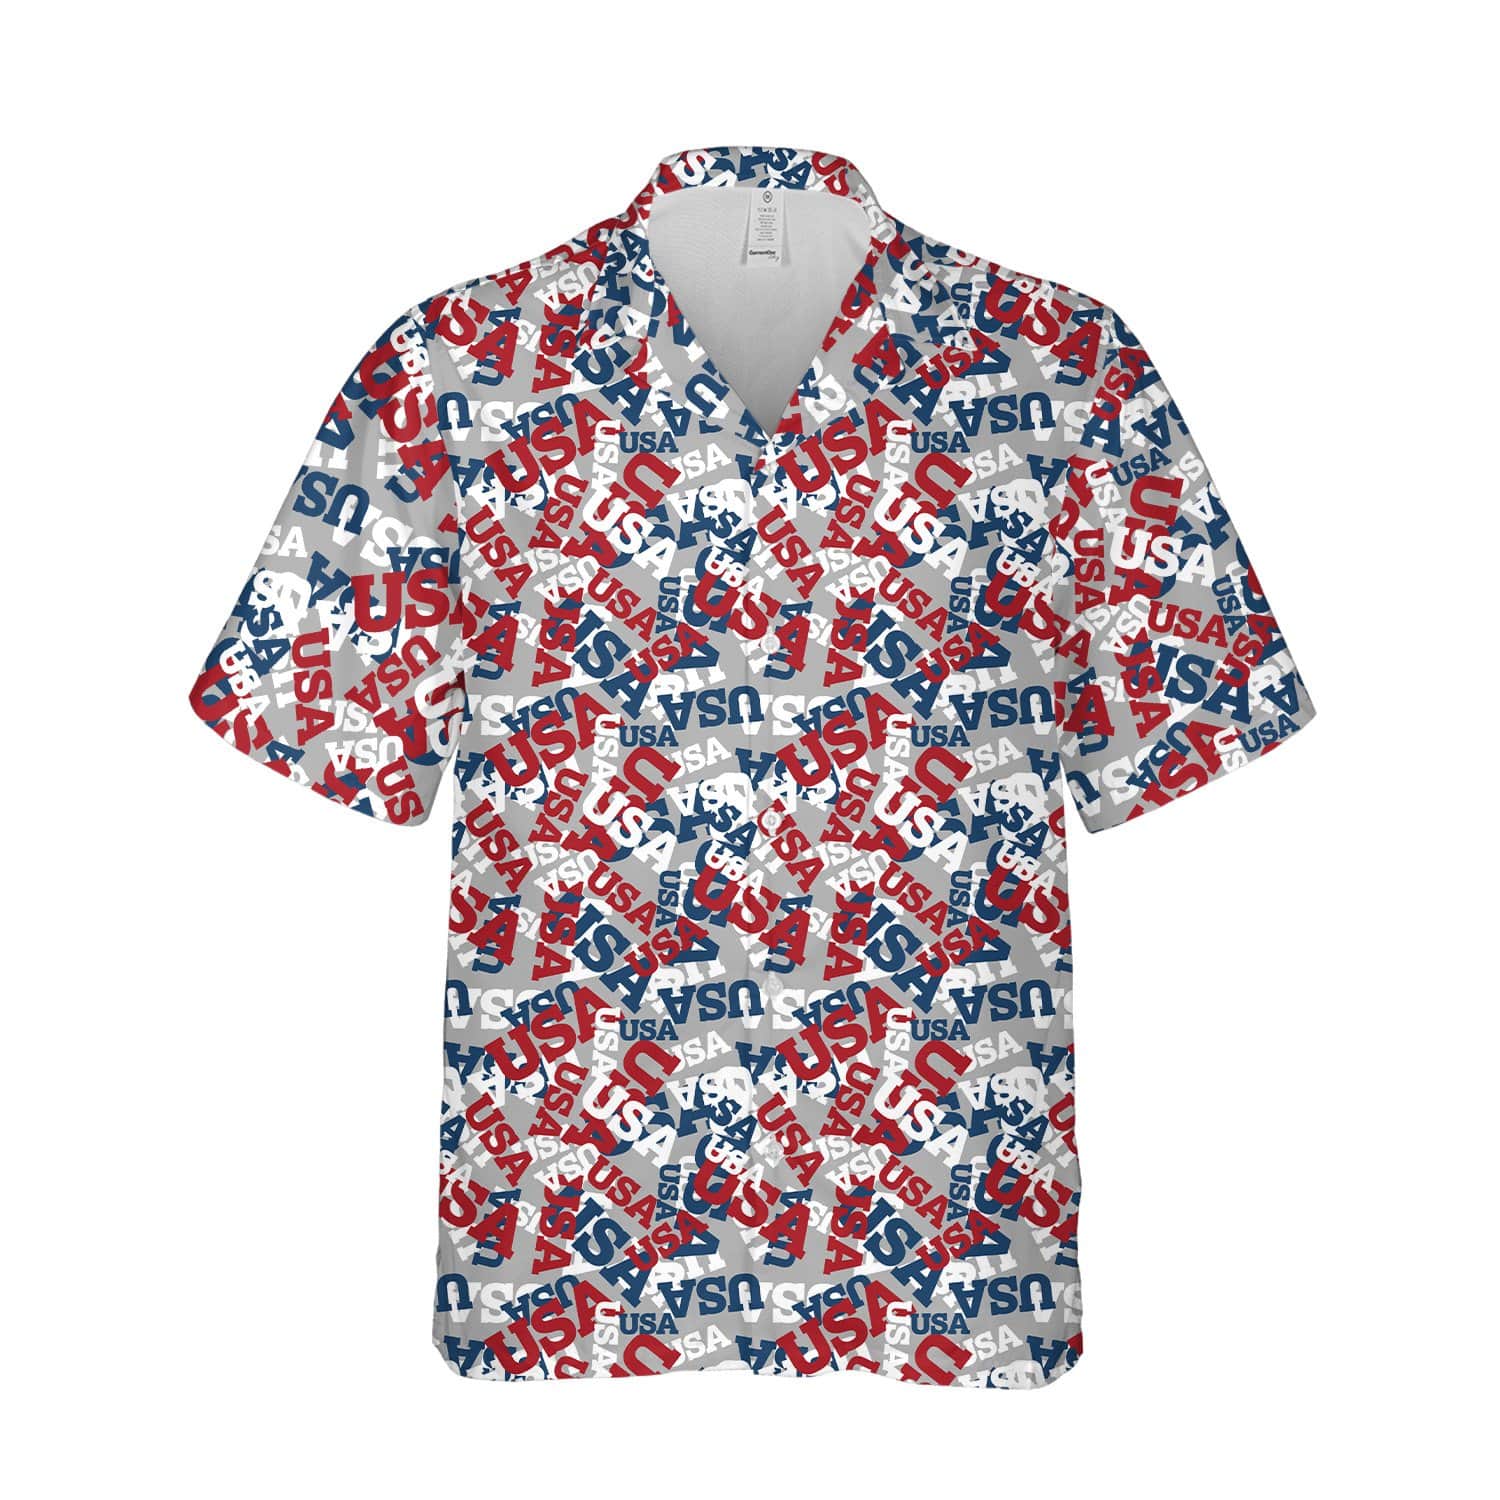 kurobase-4th-of-july-us-flag-usa-seamless-pattern-hawaiian-shirts.jpg